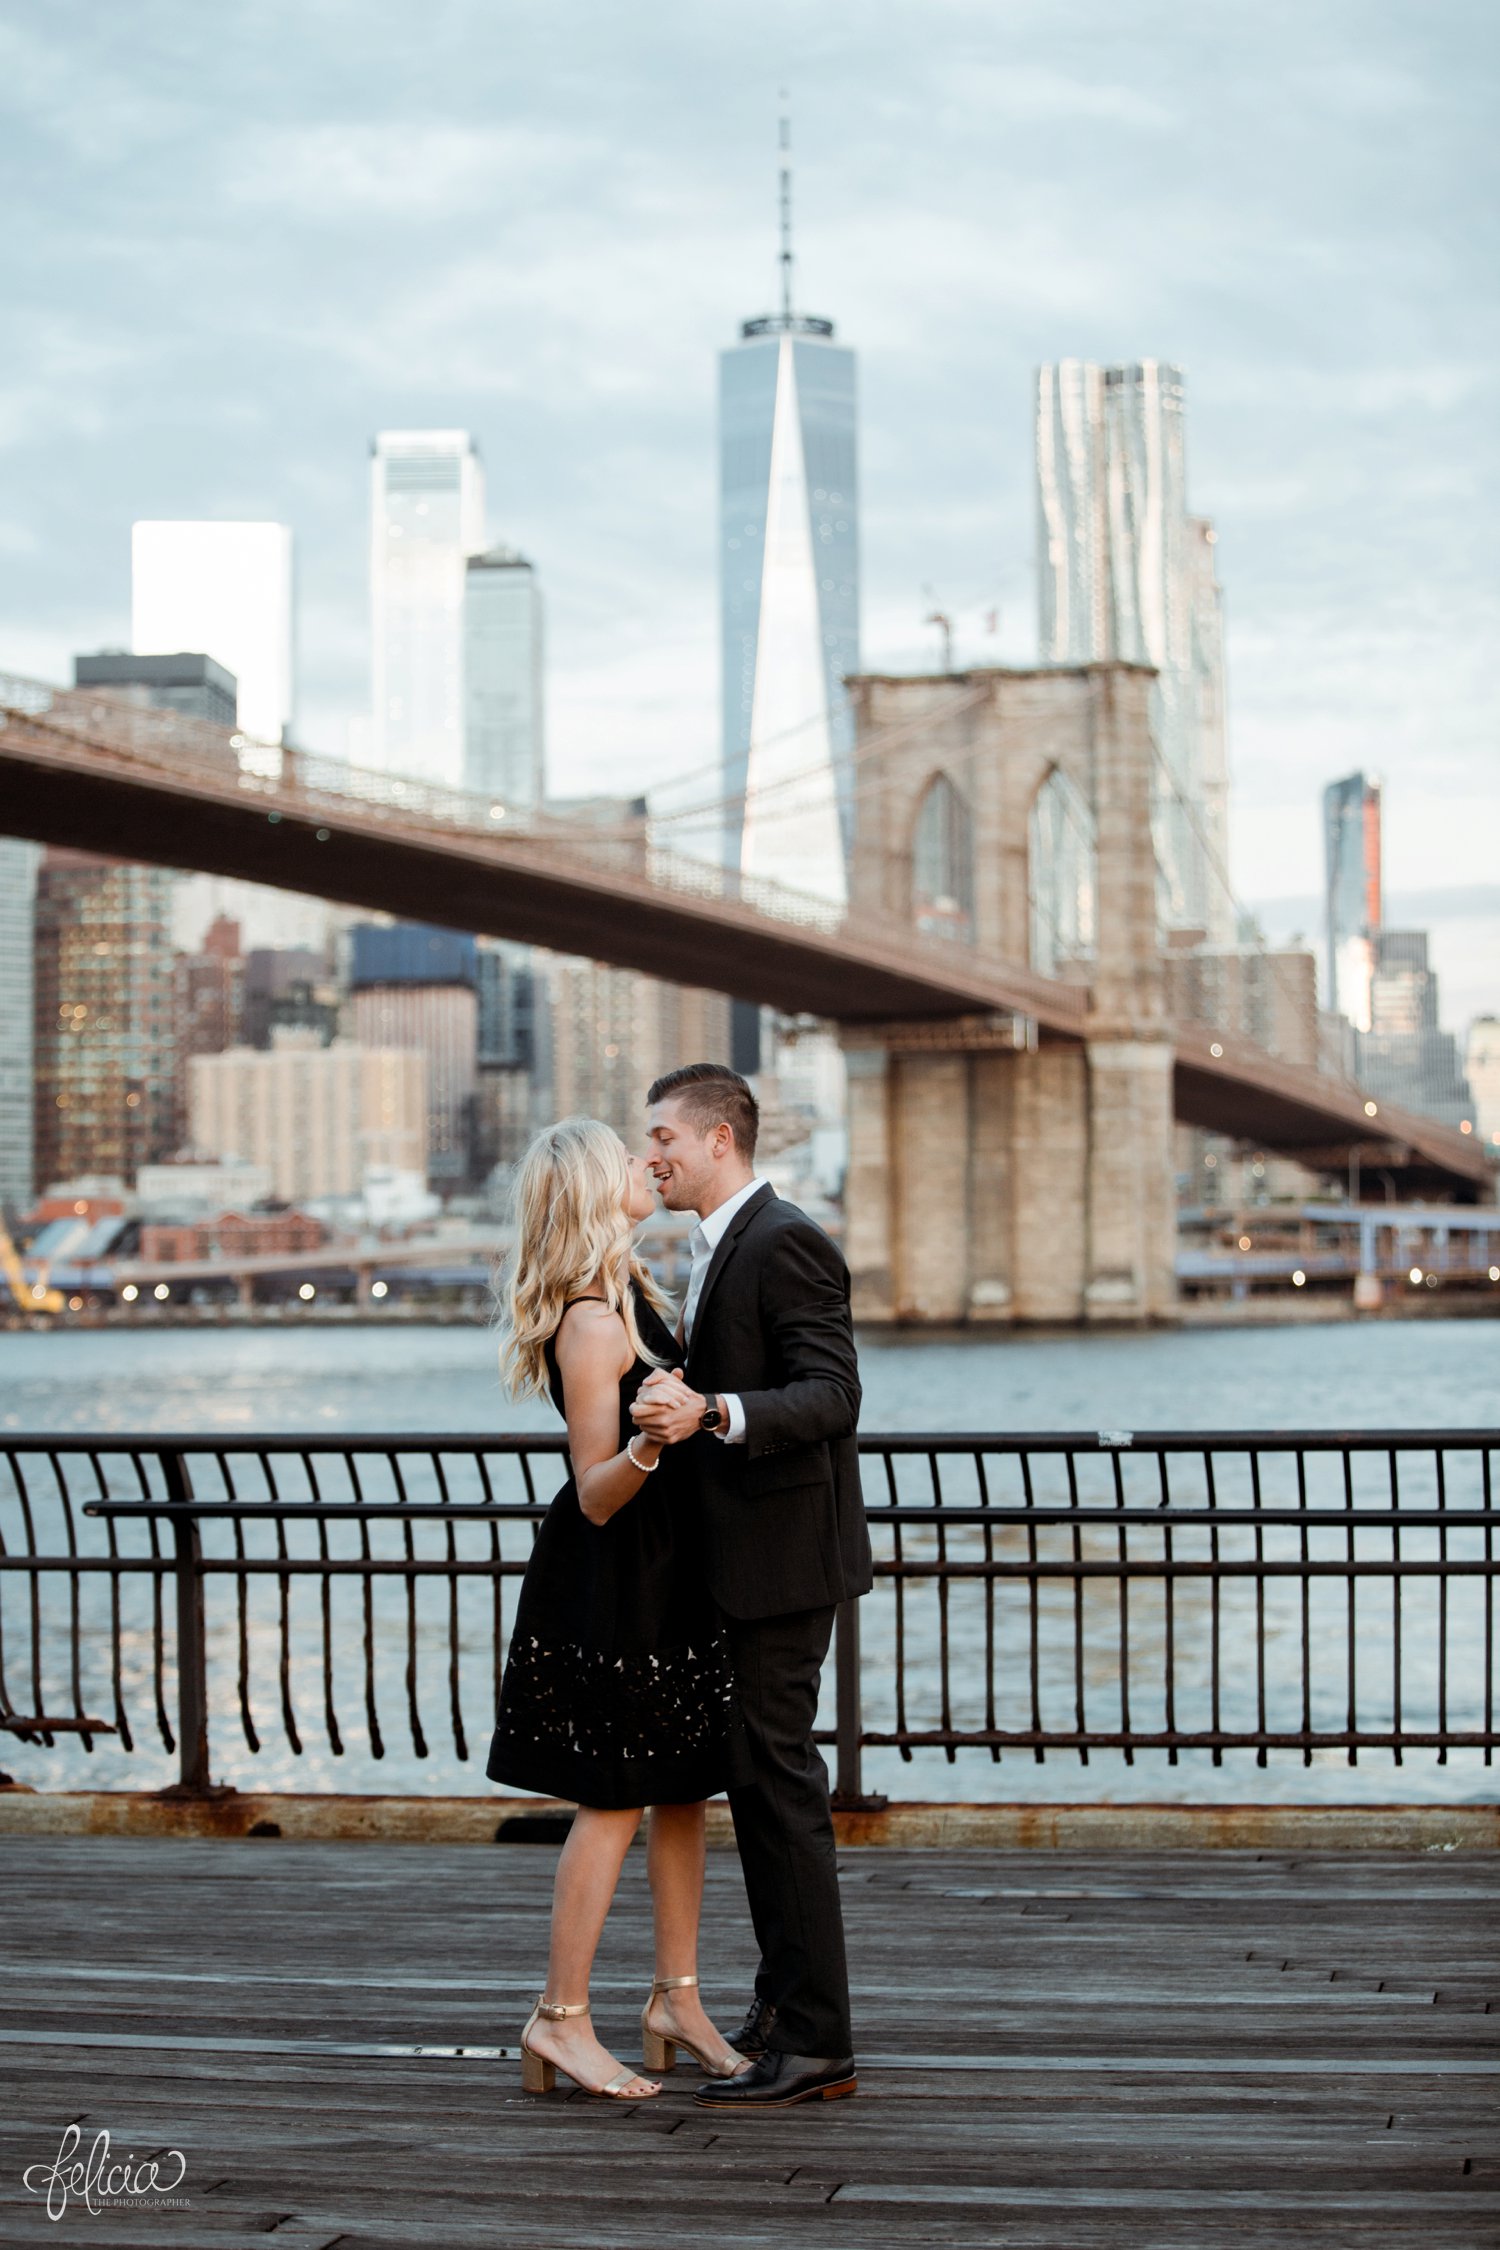 images by feliciathephotographer.com | destination wedding photographer | engagement | new york city | brooklyn bridge | skyline | formal | classic | true love | romantic | dance | 